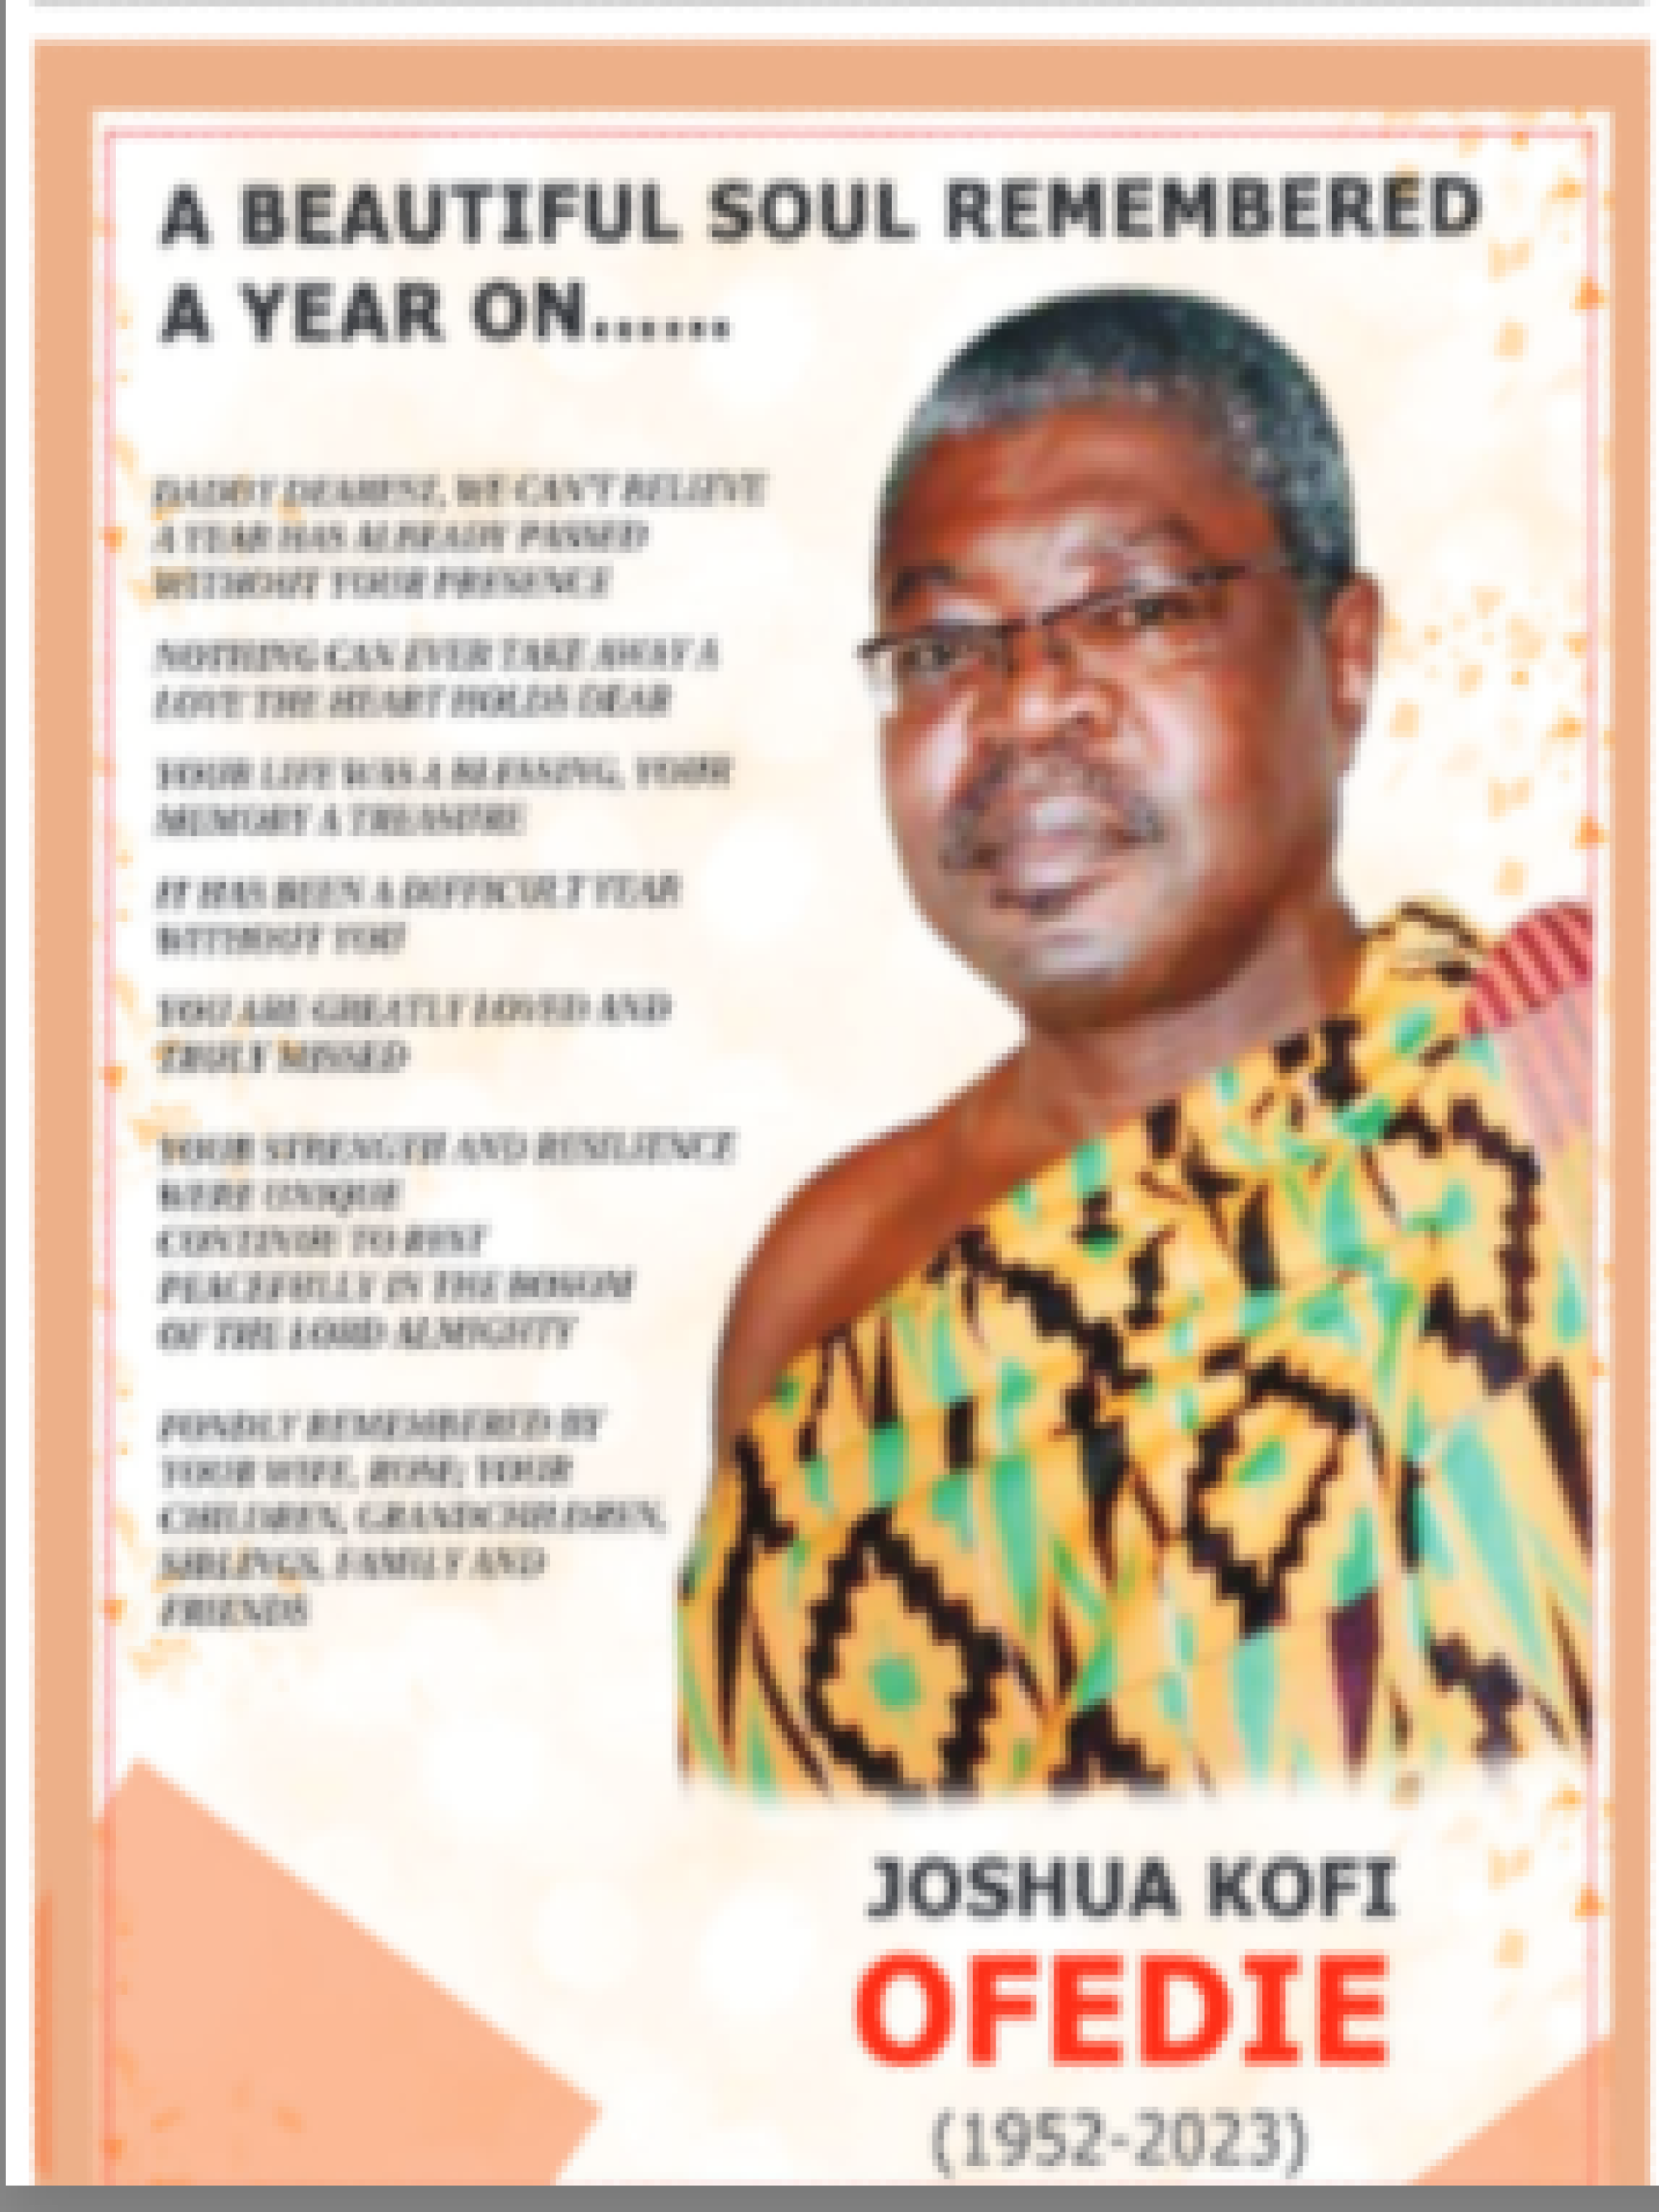 Mr. Joshua Kofi Ofedie